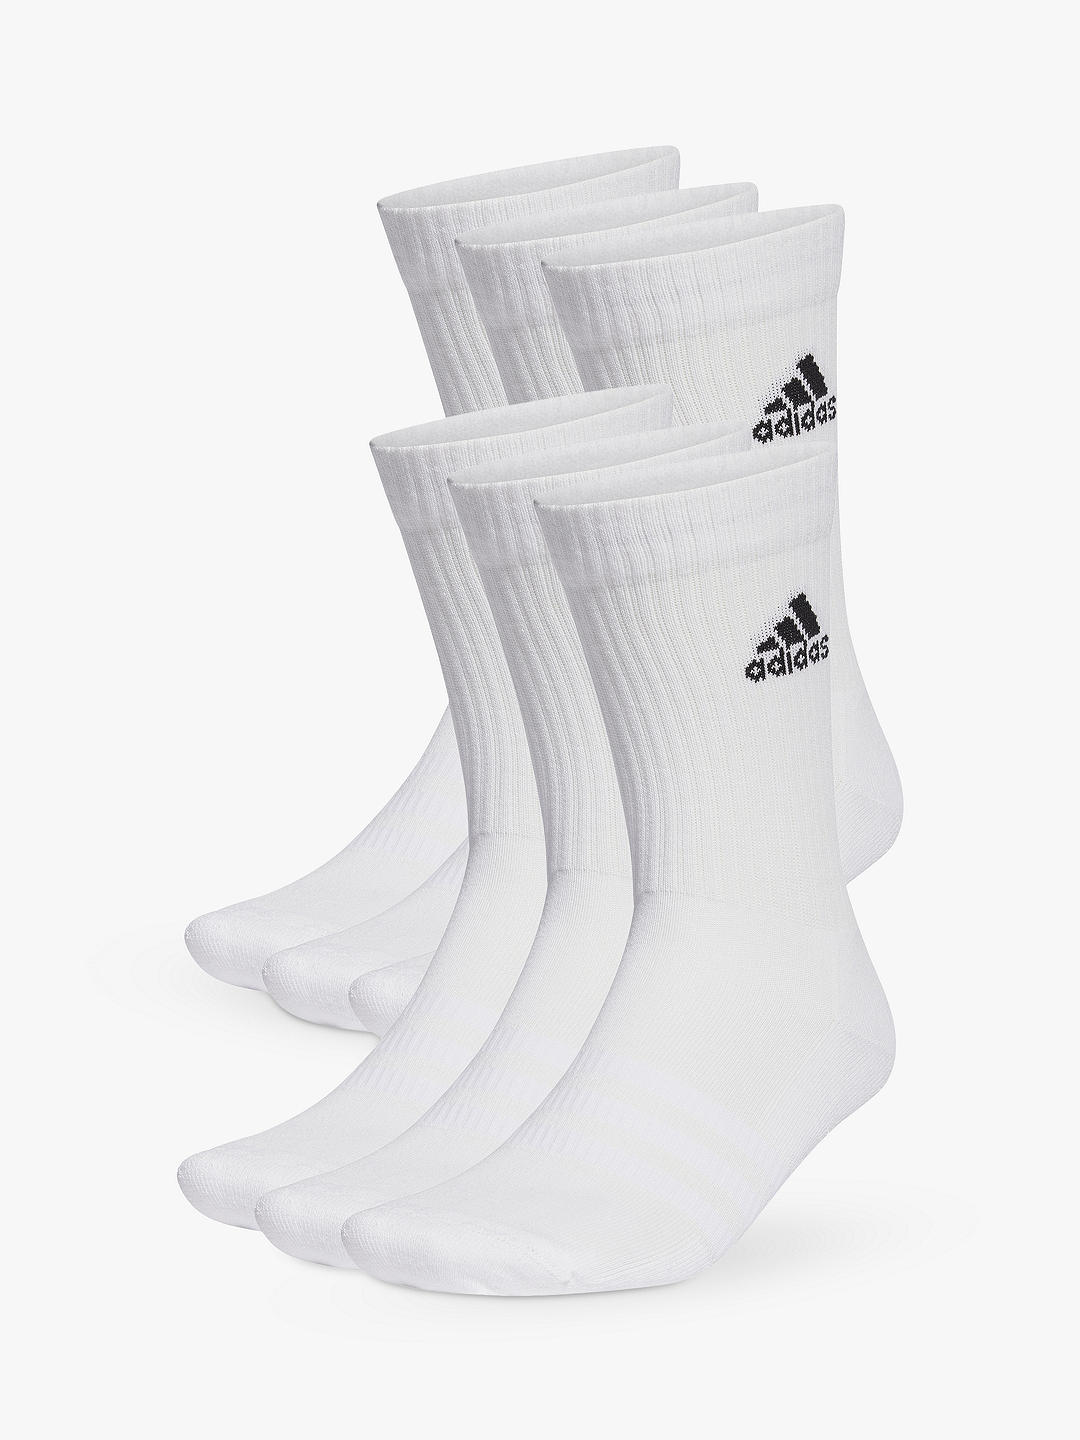 adidas Cushioned Crew Socks, Pack of 6, White/Black